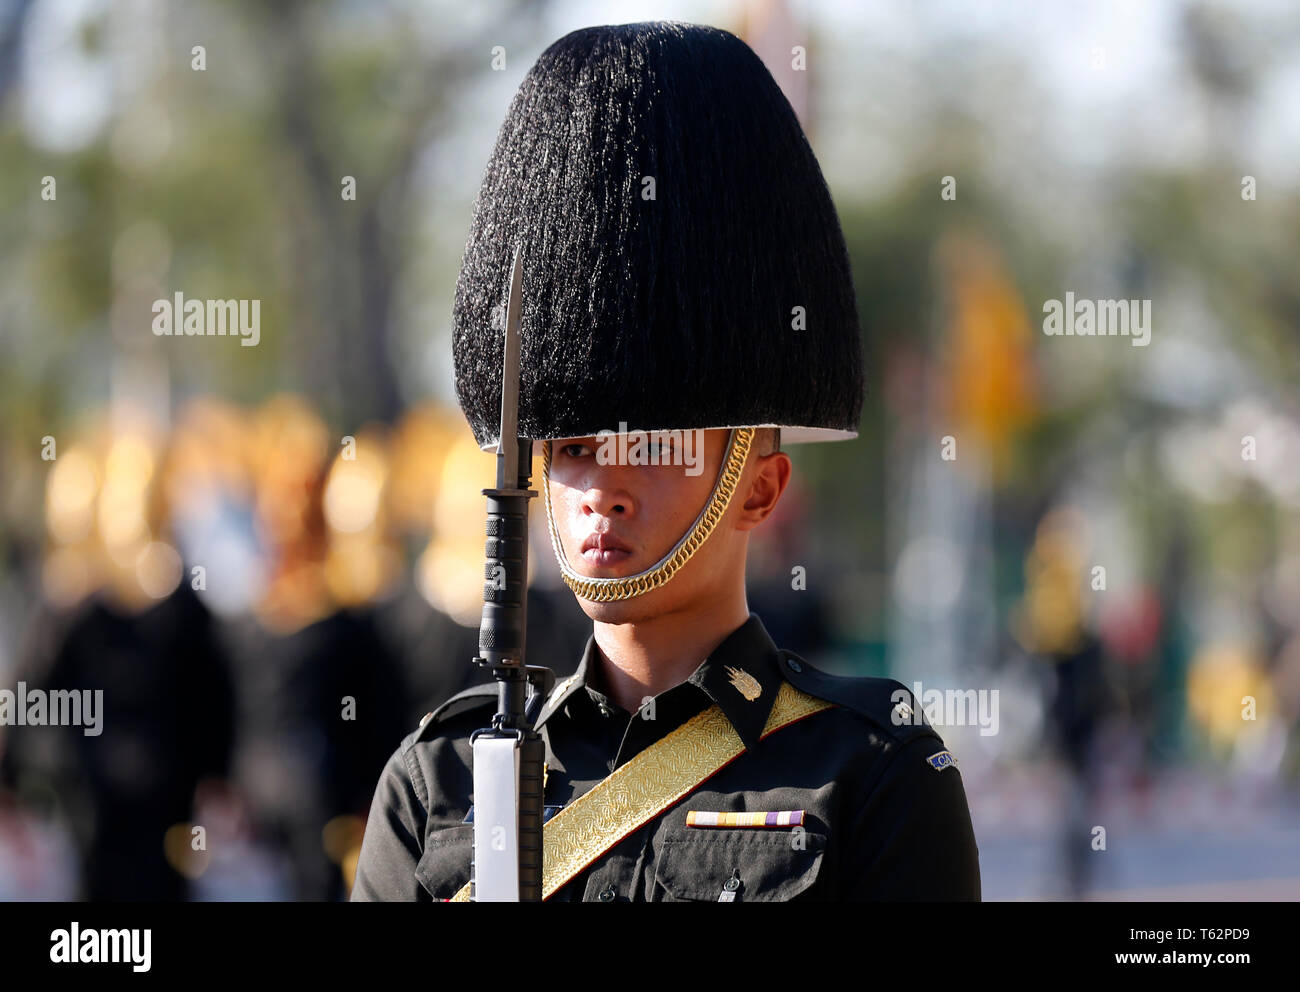 A soldier seen during the processions rehearsal ahead of the royal coronation of Thailand's King Maha Vajiralongkorn Bodindradebayavarangkun (Rama X) in Bangkok. Stock Photo